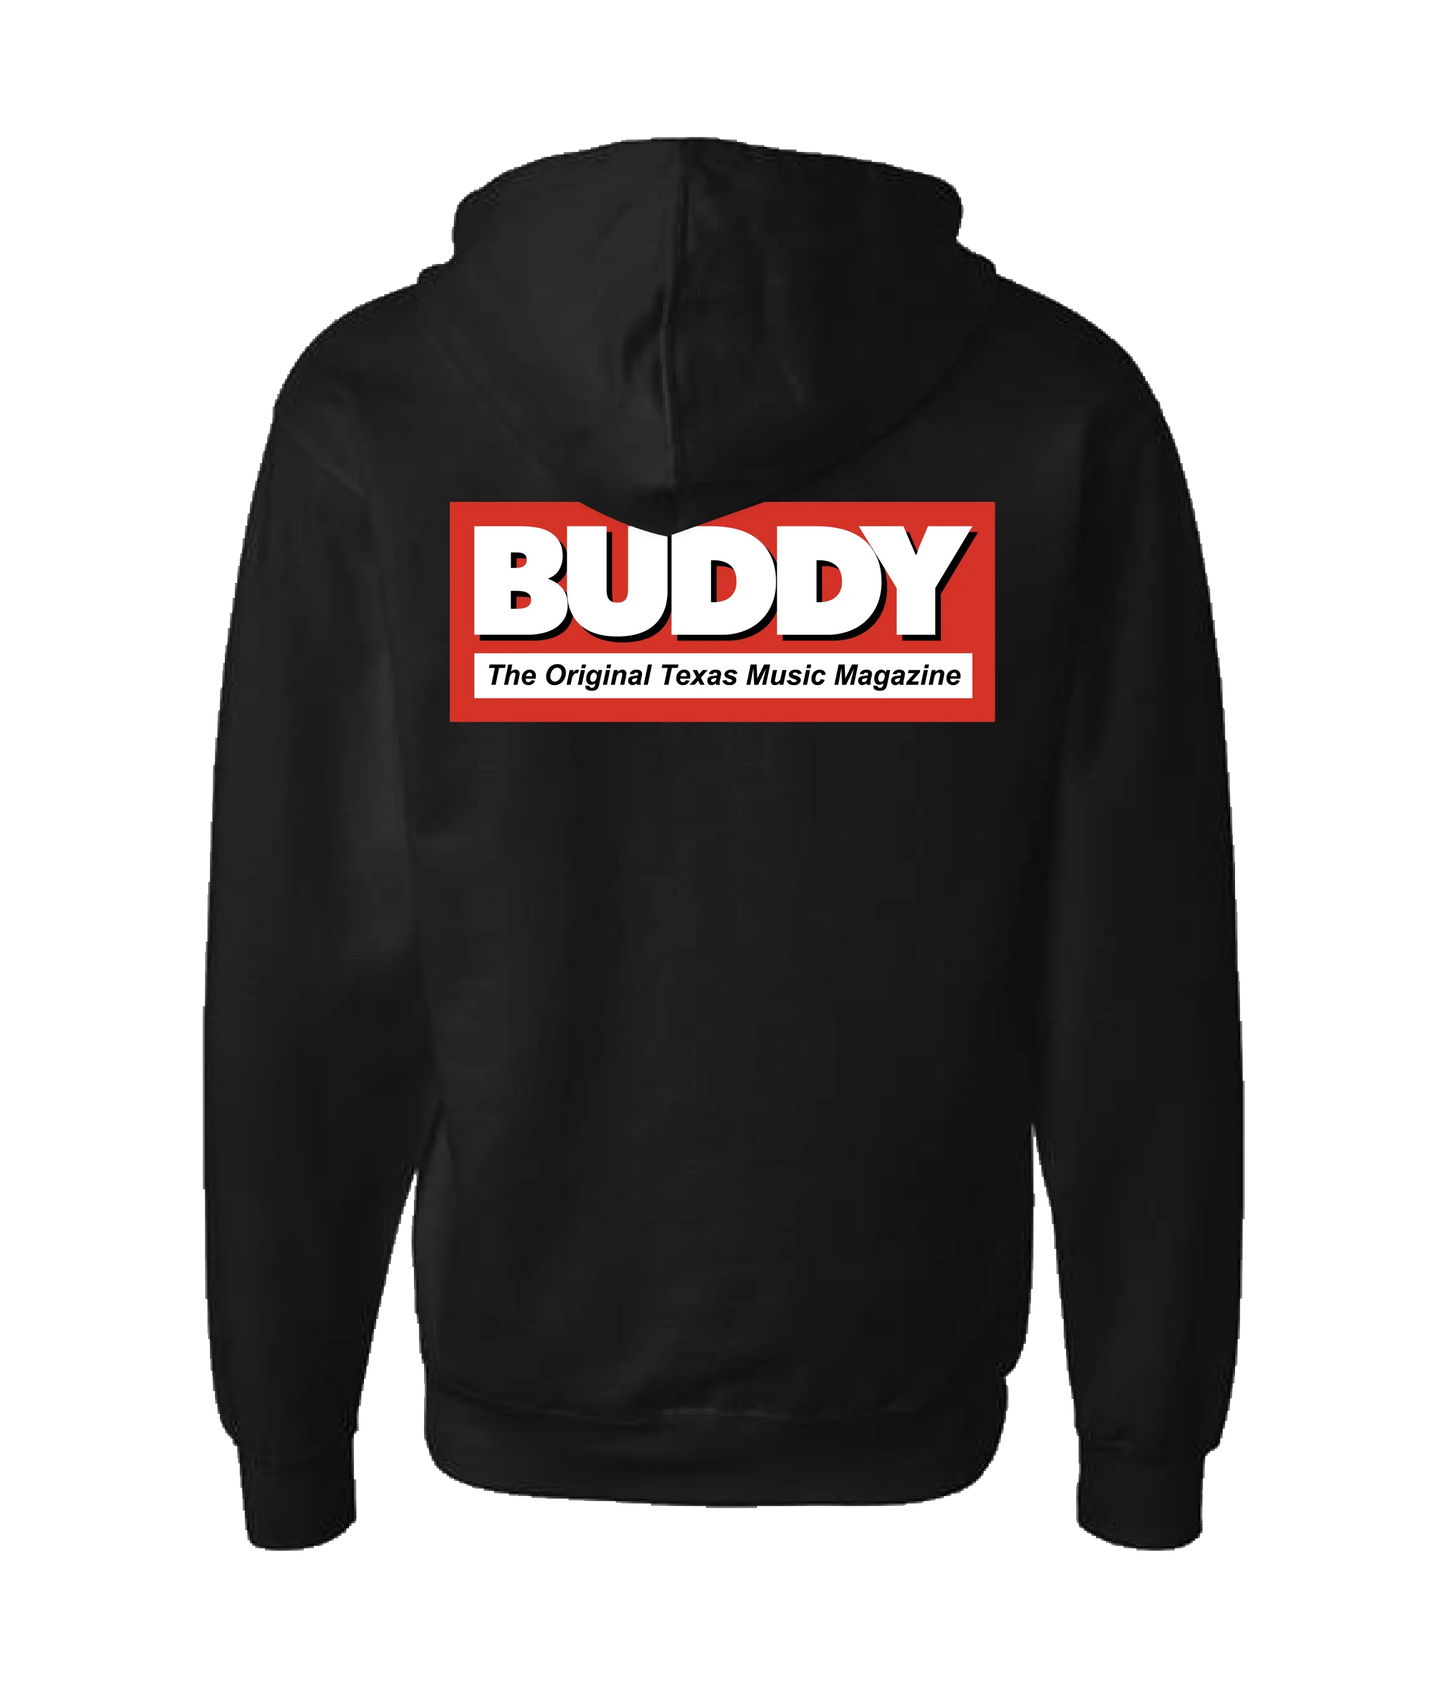 Buddy Magazine - Buddy Logo (red) - Black Zip Up Hoodie